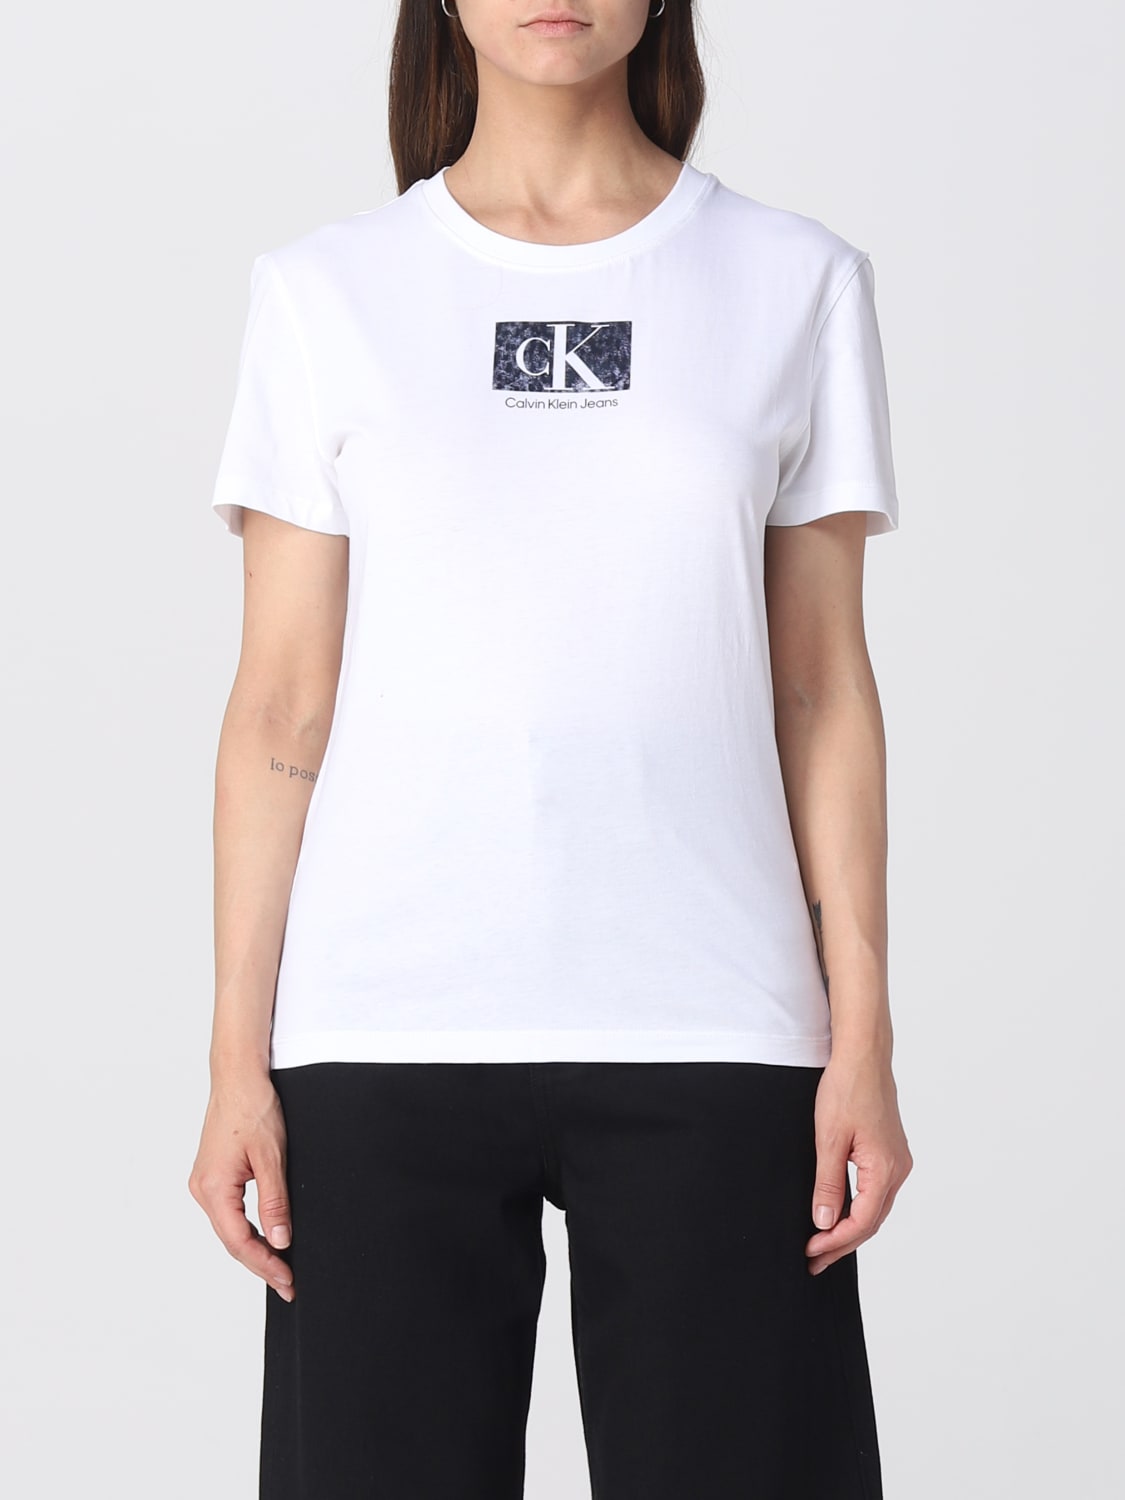 T-shirt Calvin Klein Jeans in cotone